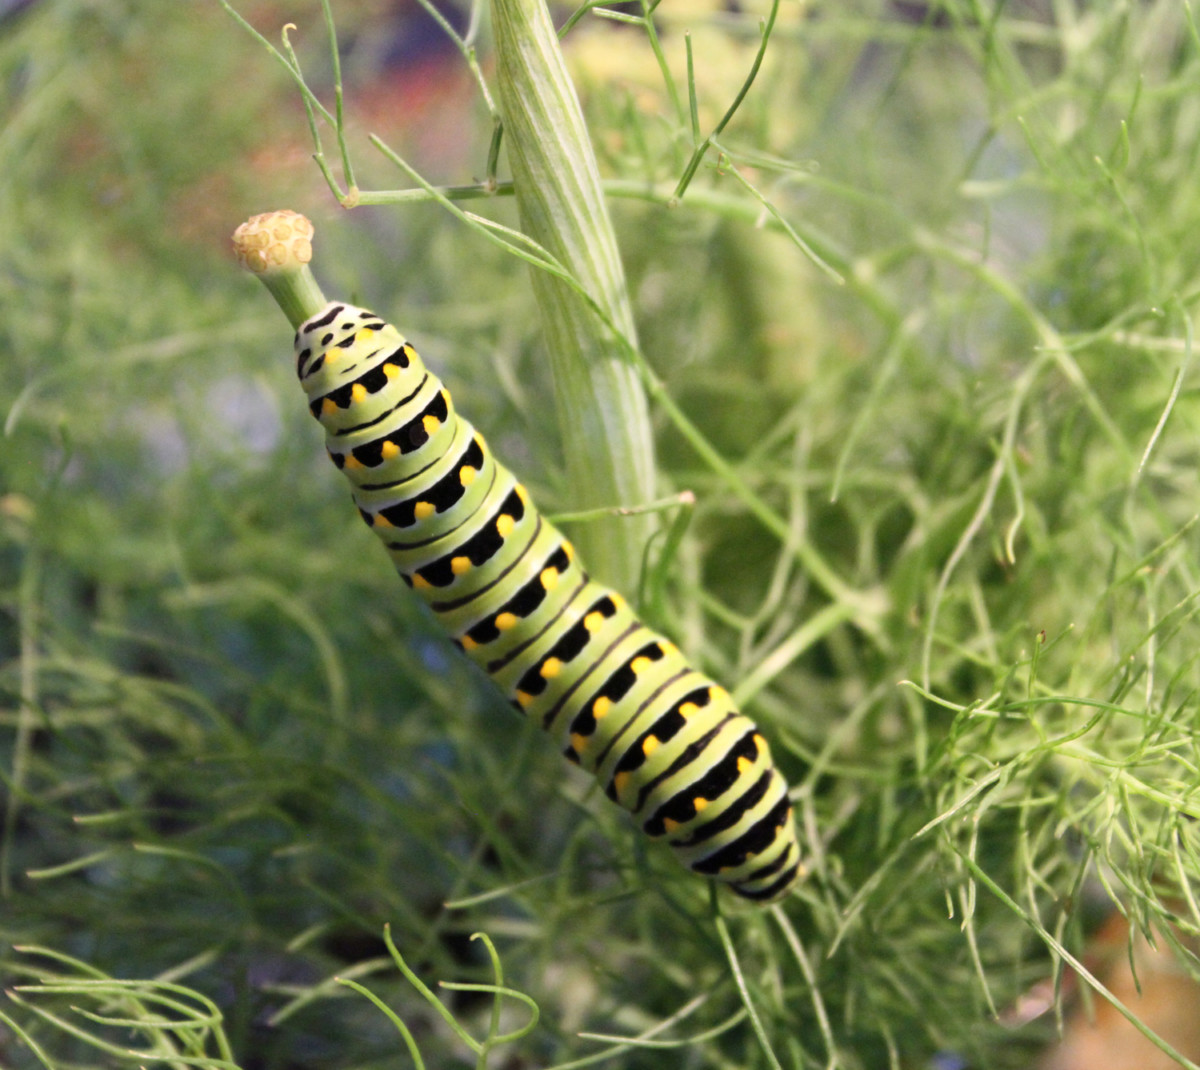 20. Swallowtail Caterpillar